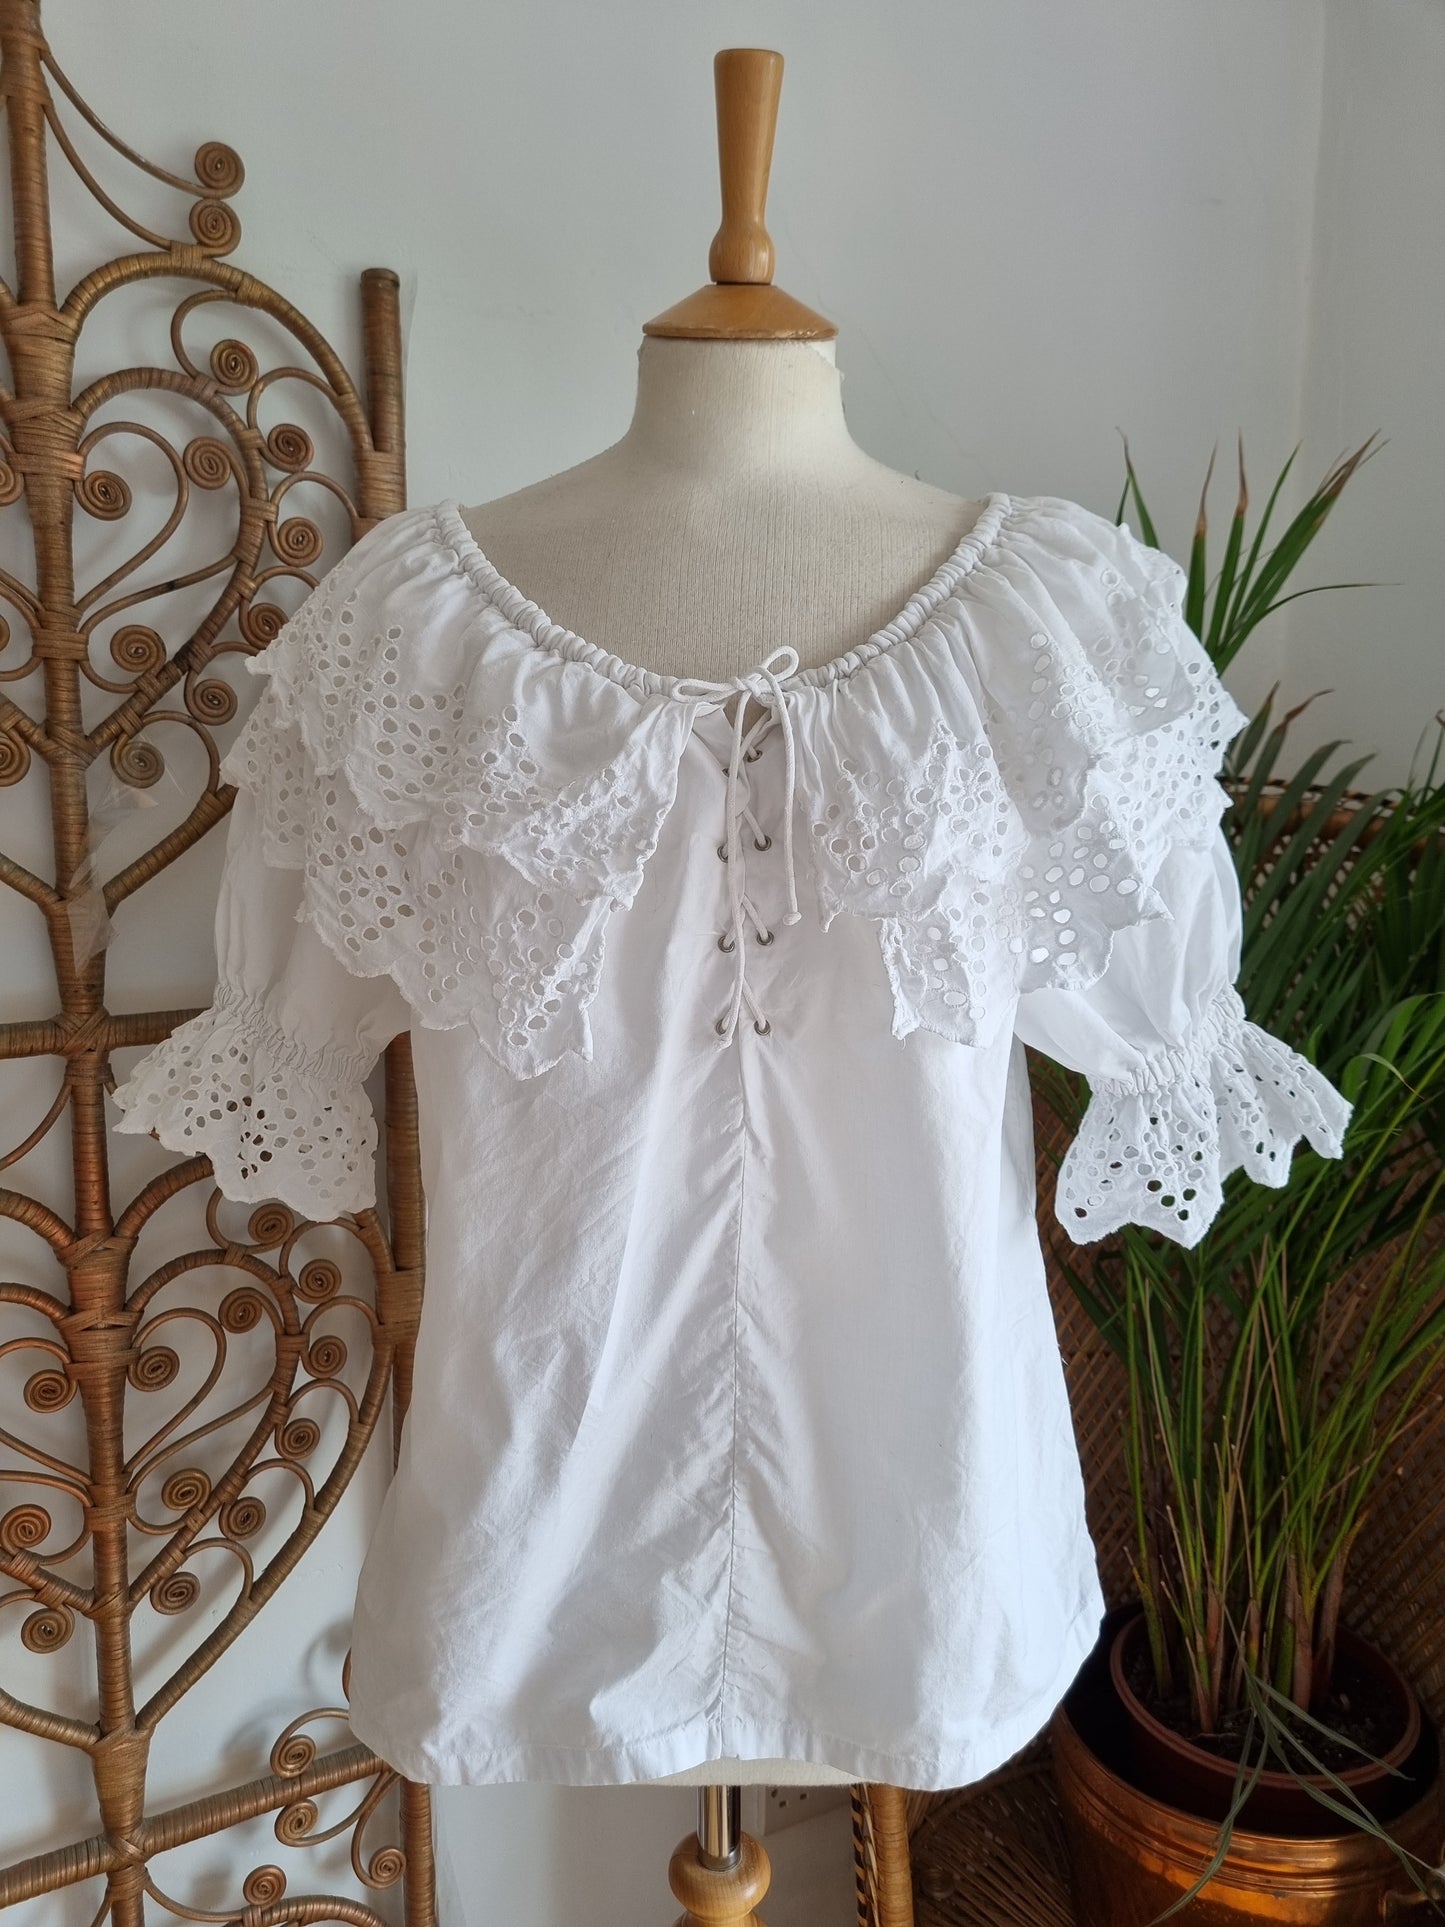 Vintage embroidery anglaise prairie blouse